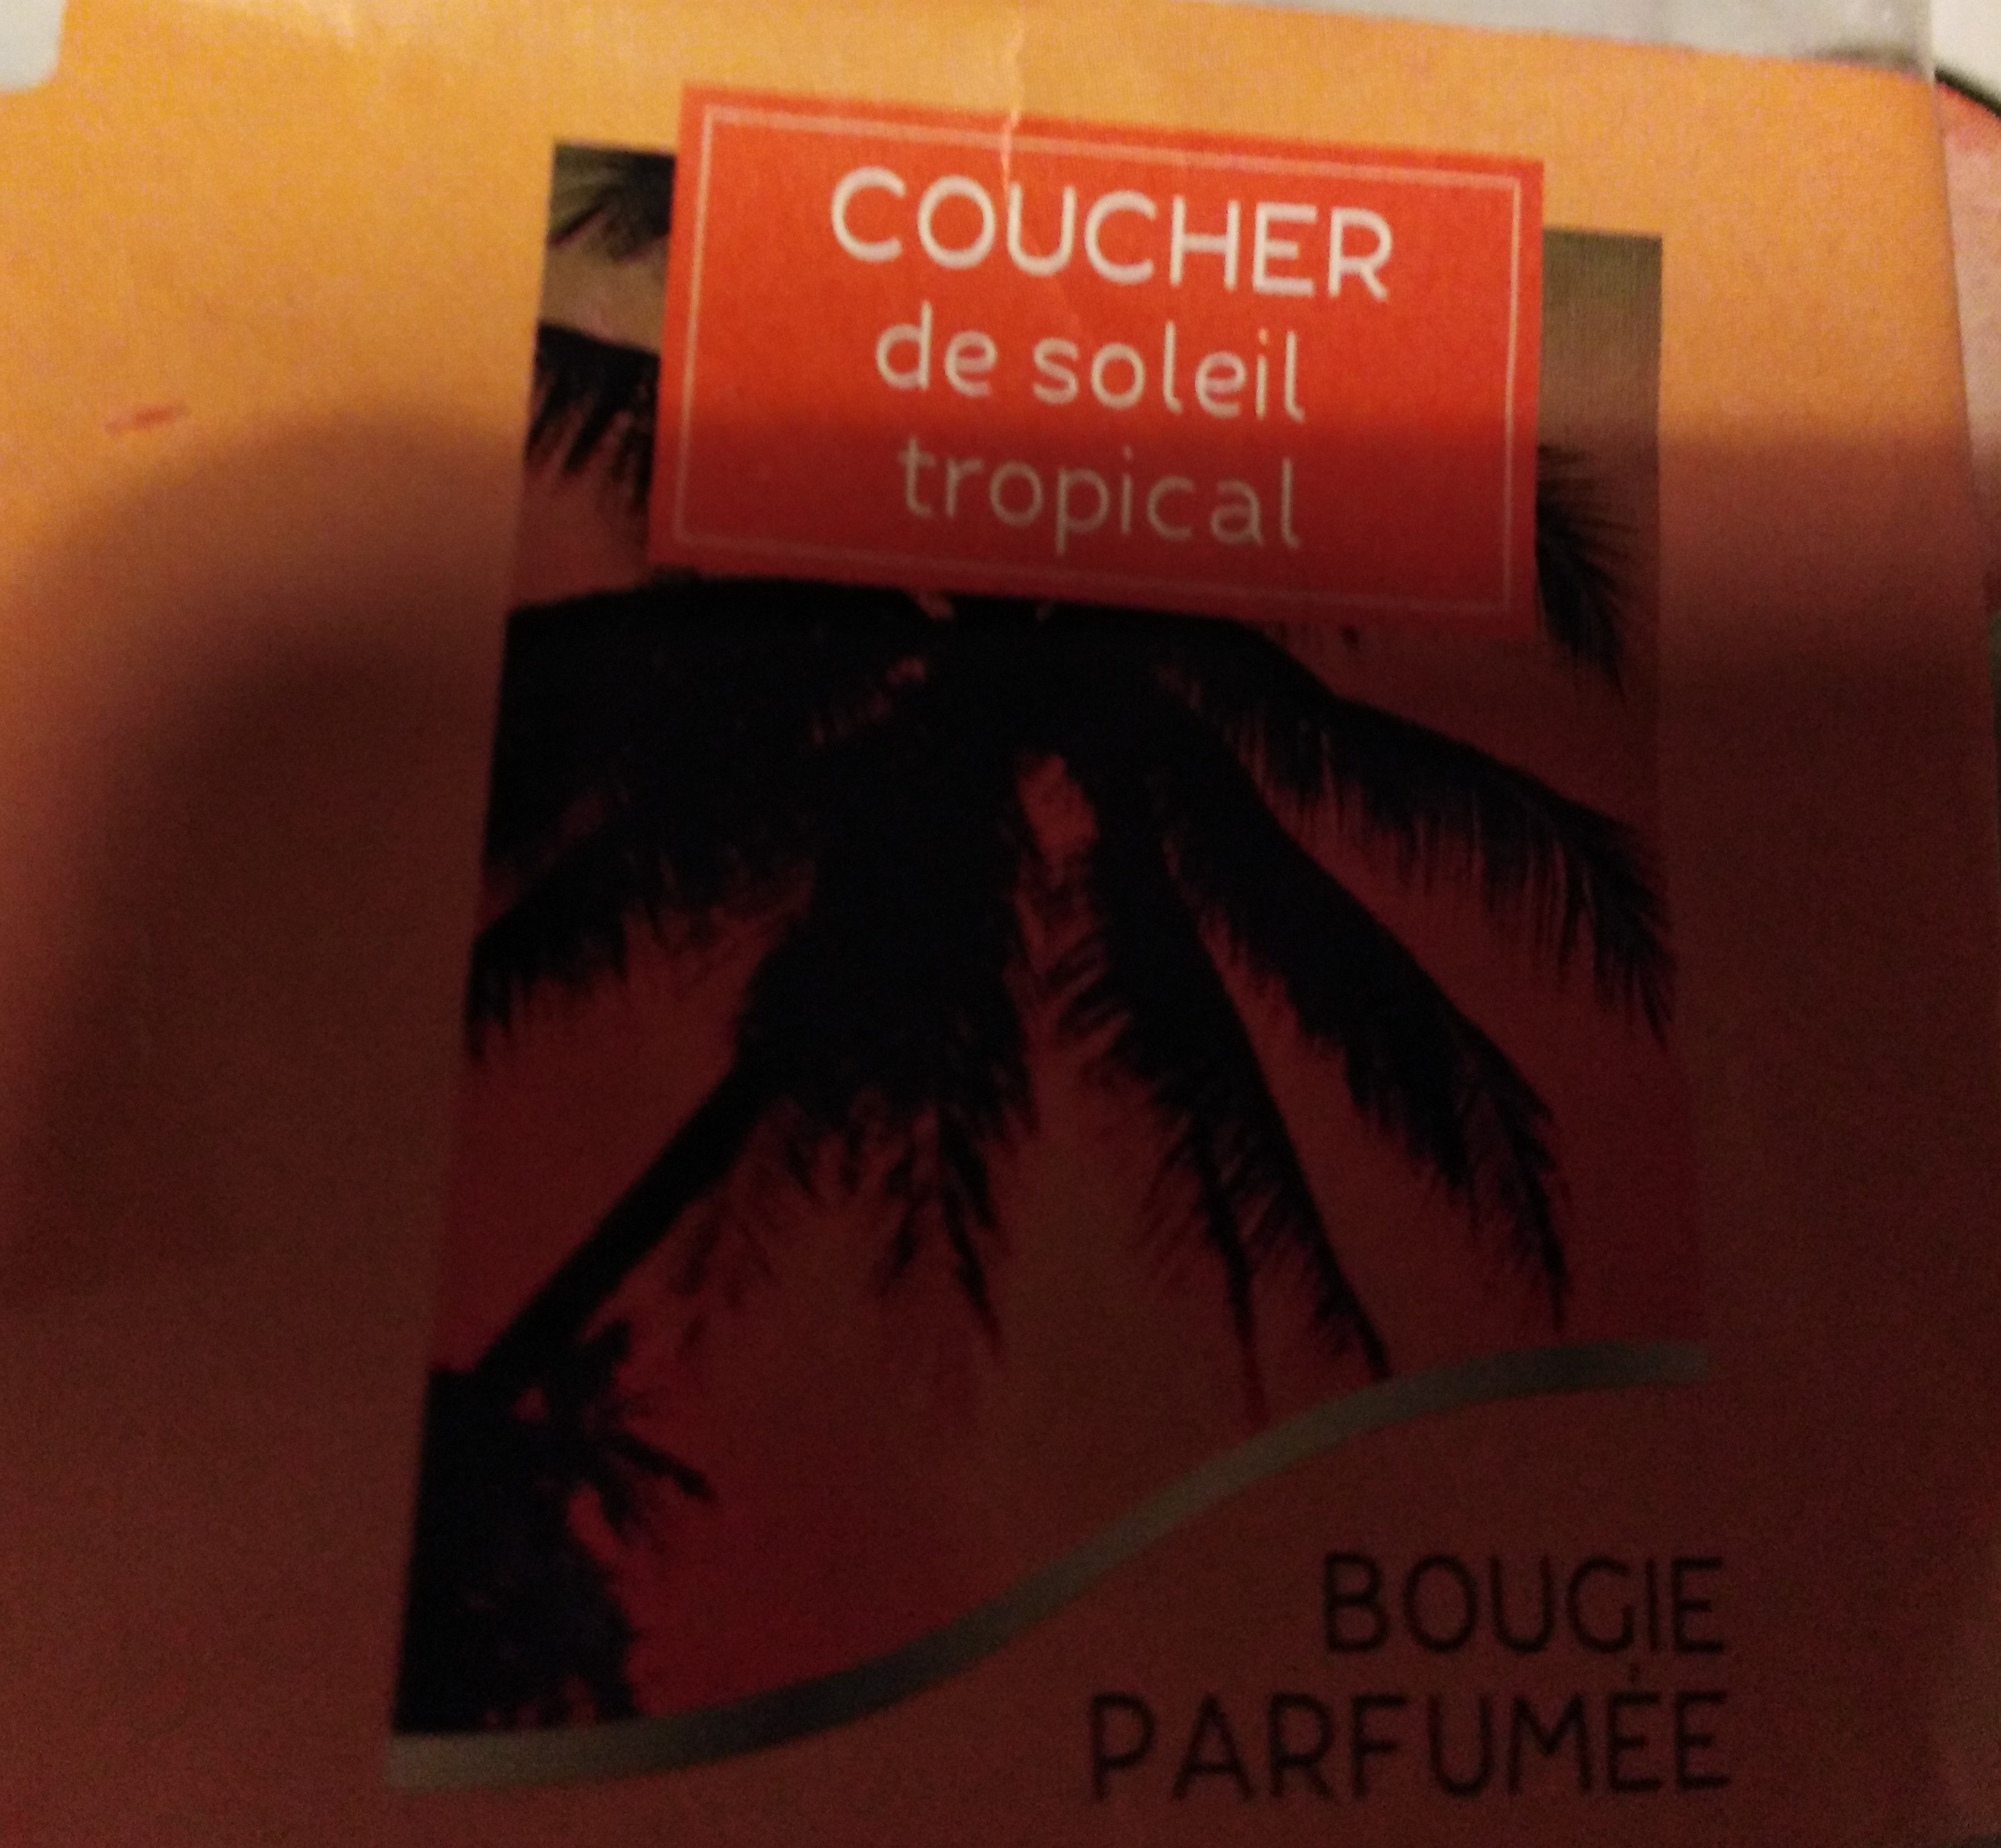 BOUGIE PARFUMEE - Product - fr